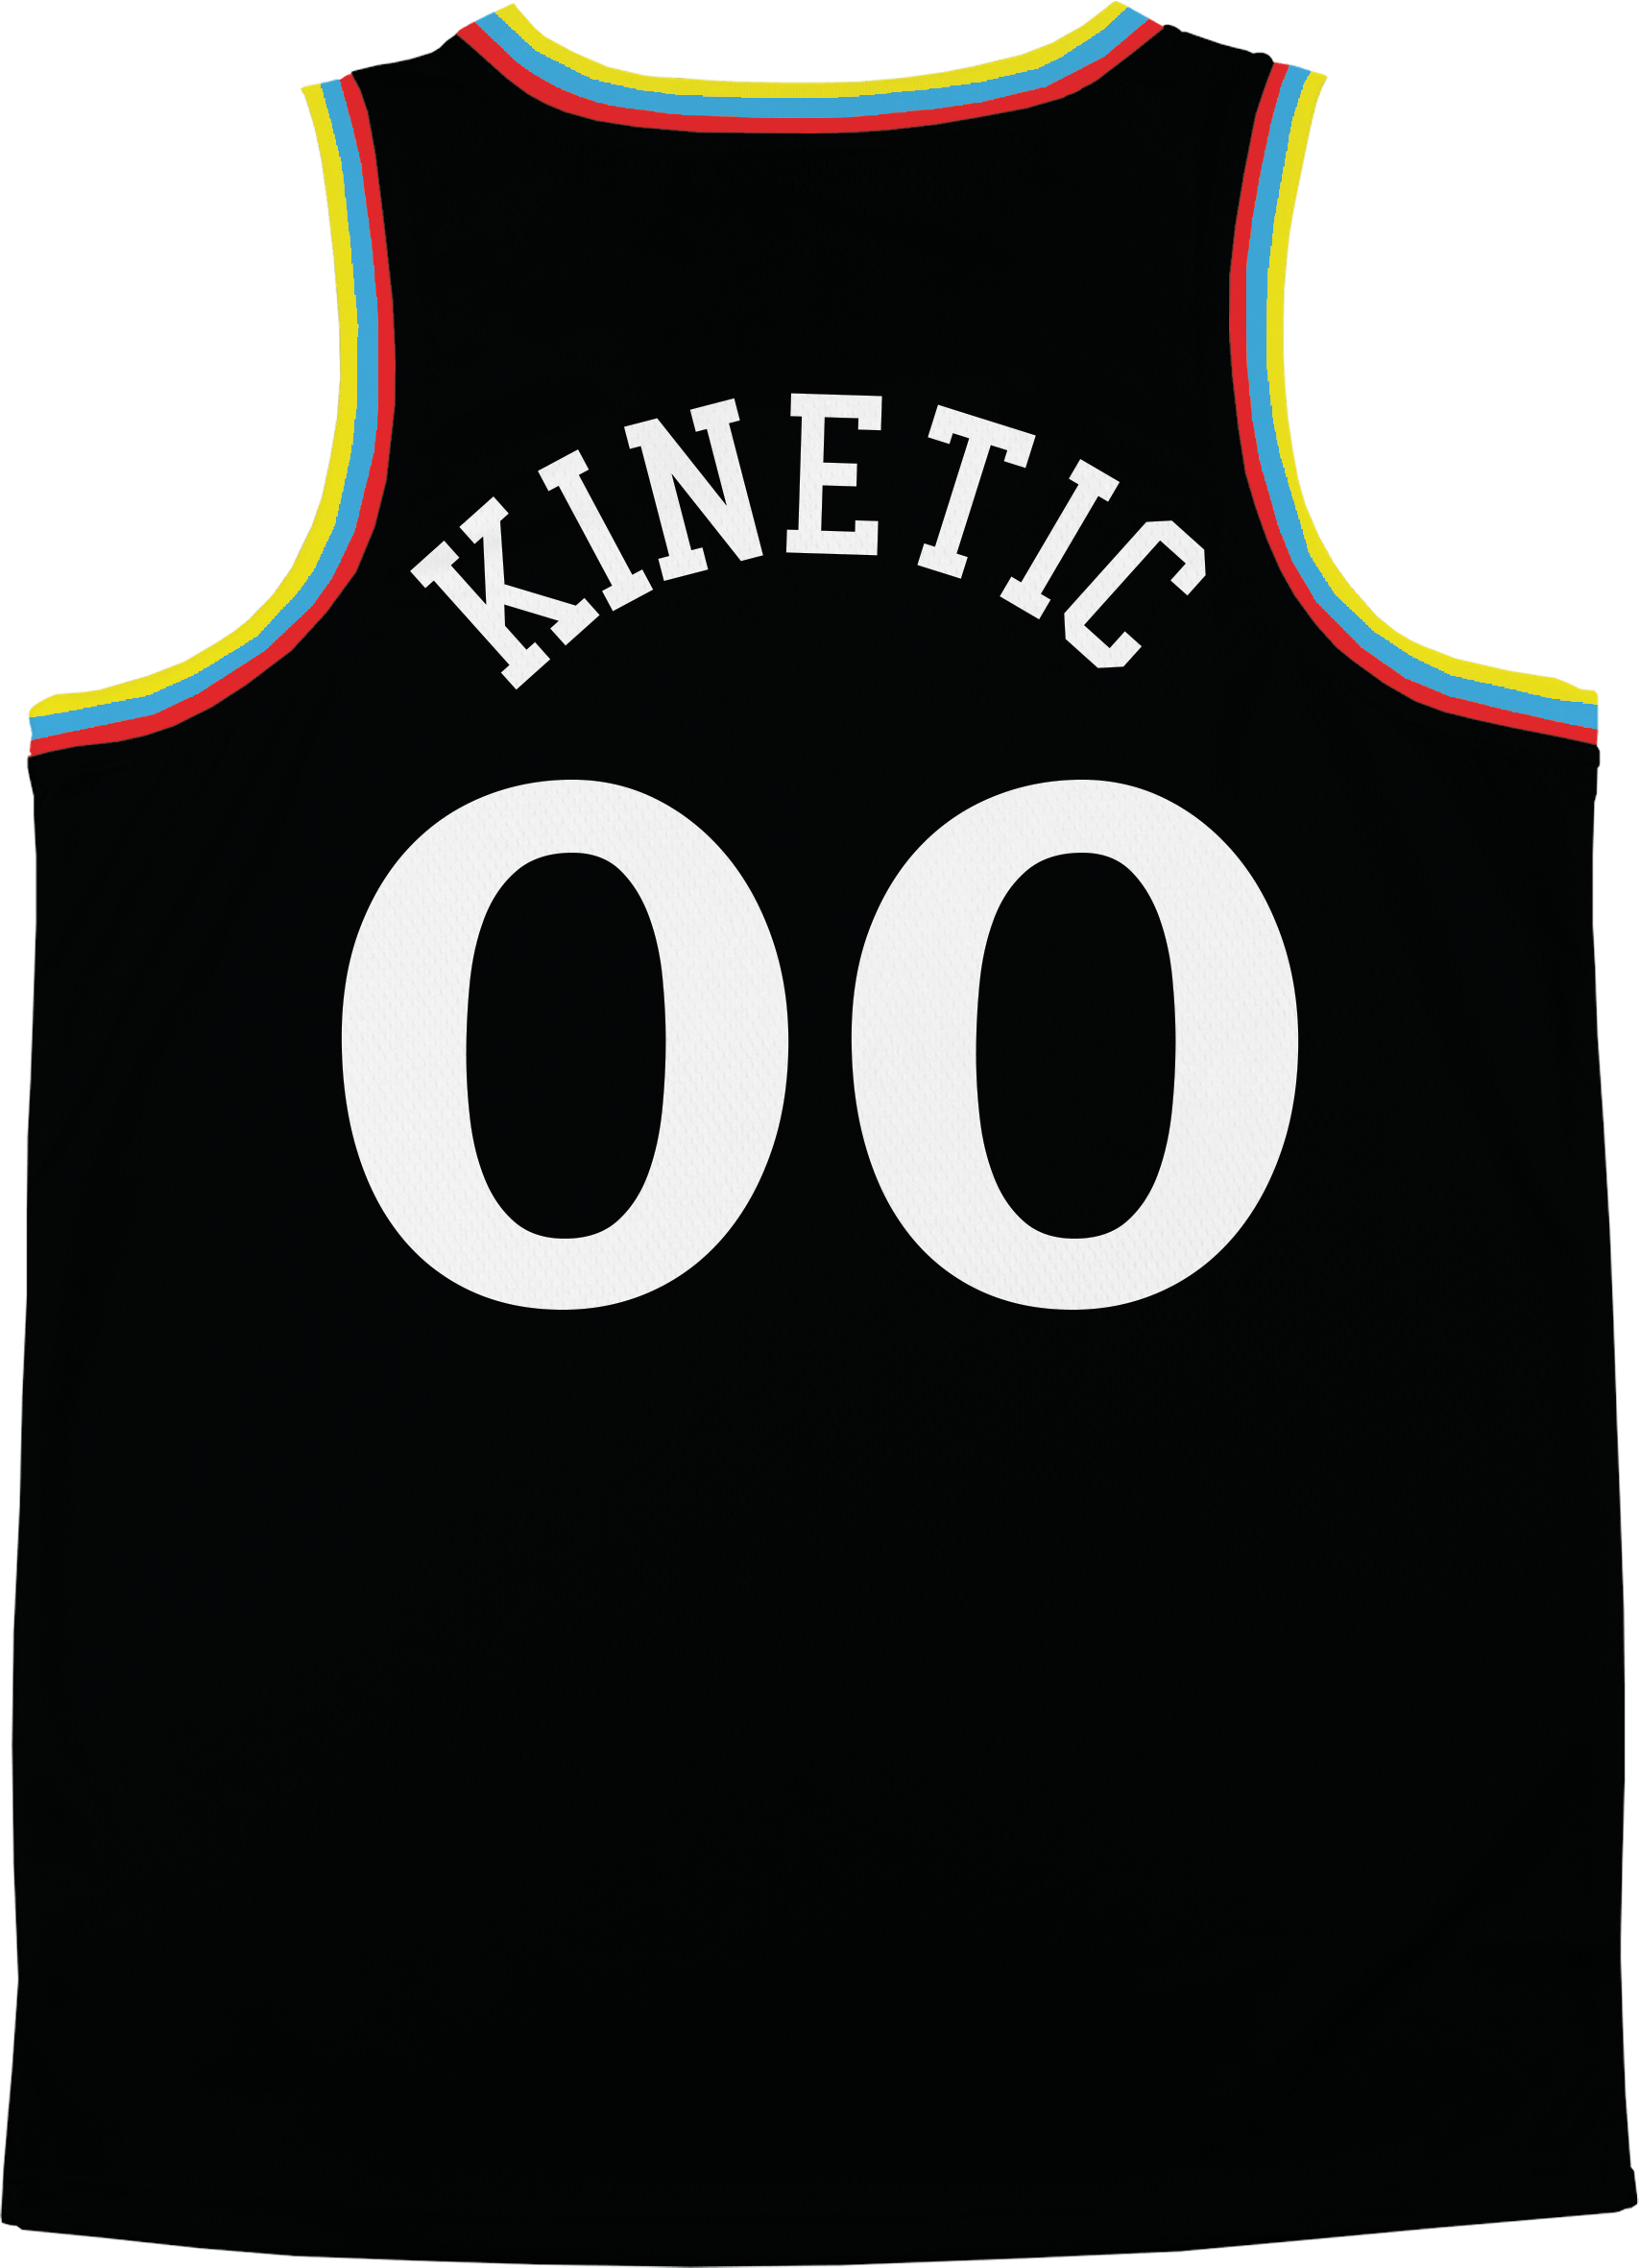 Chi Phi - Crayon House Basketball Jersey - Kinetic Society